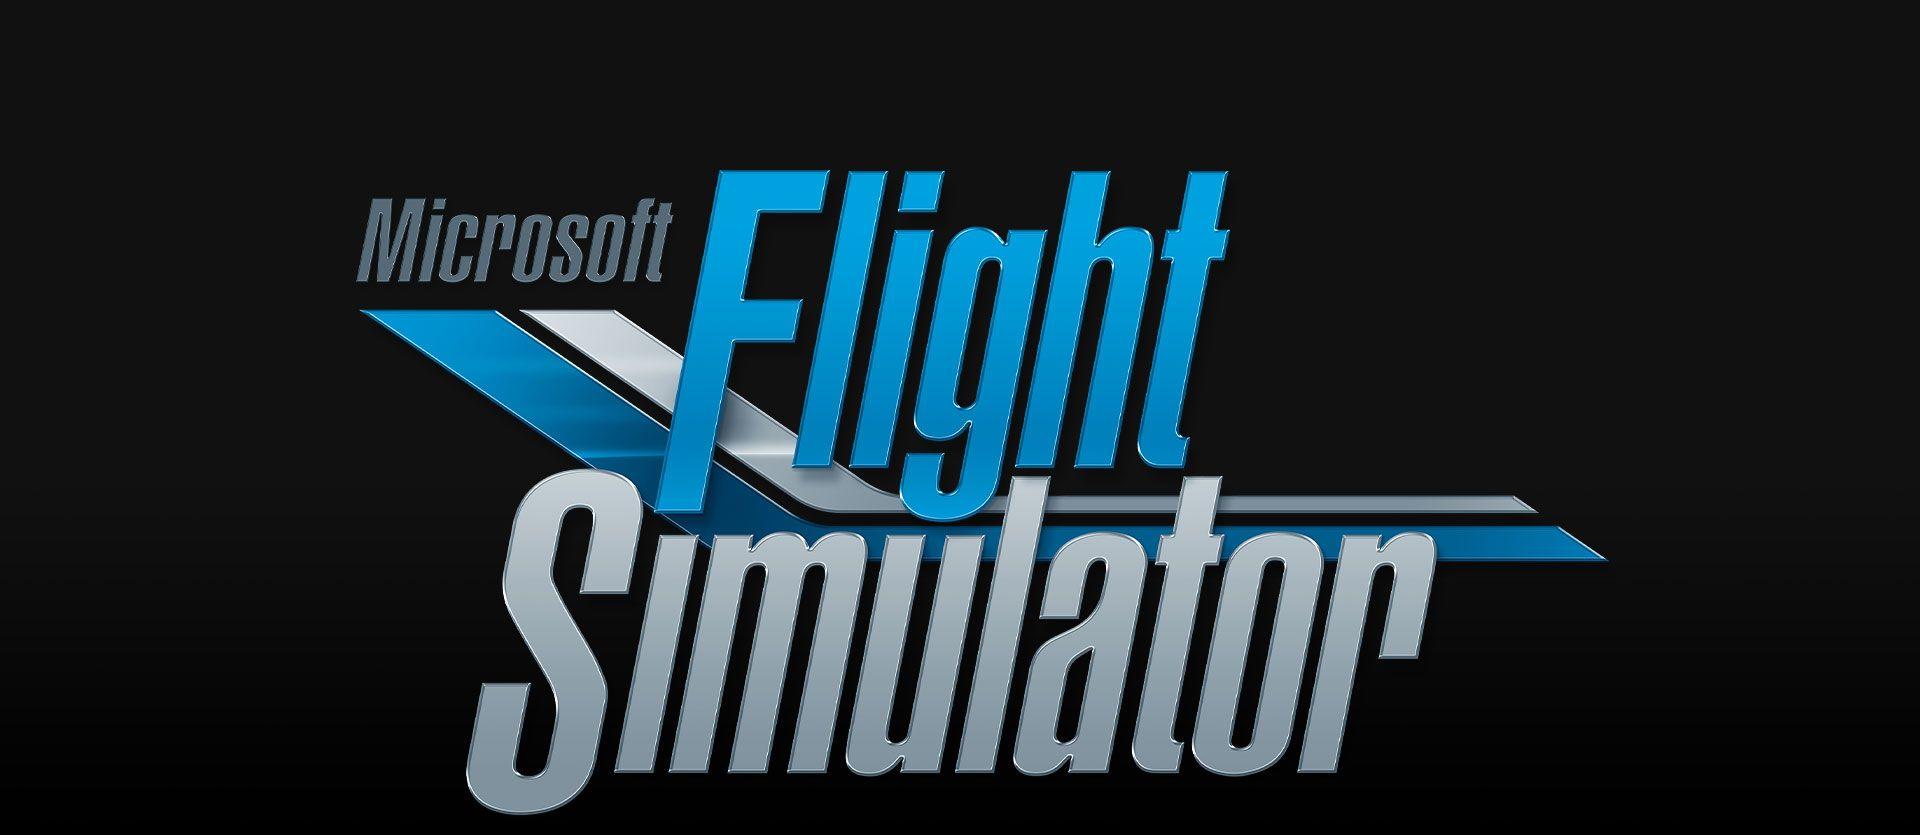 Simulator Logo - Microsoft Flight Simulator for Xbox One & Windows 10